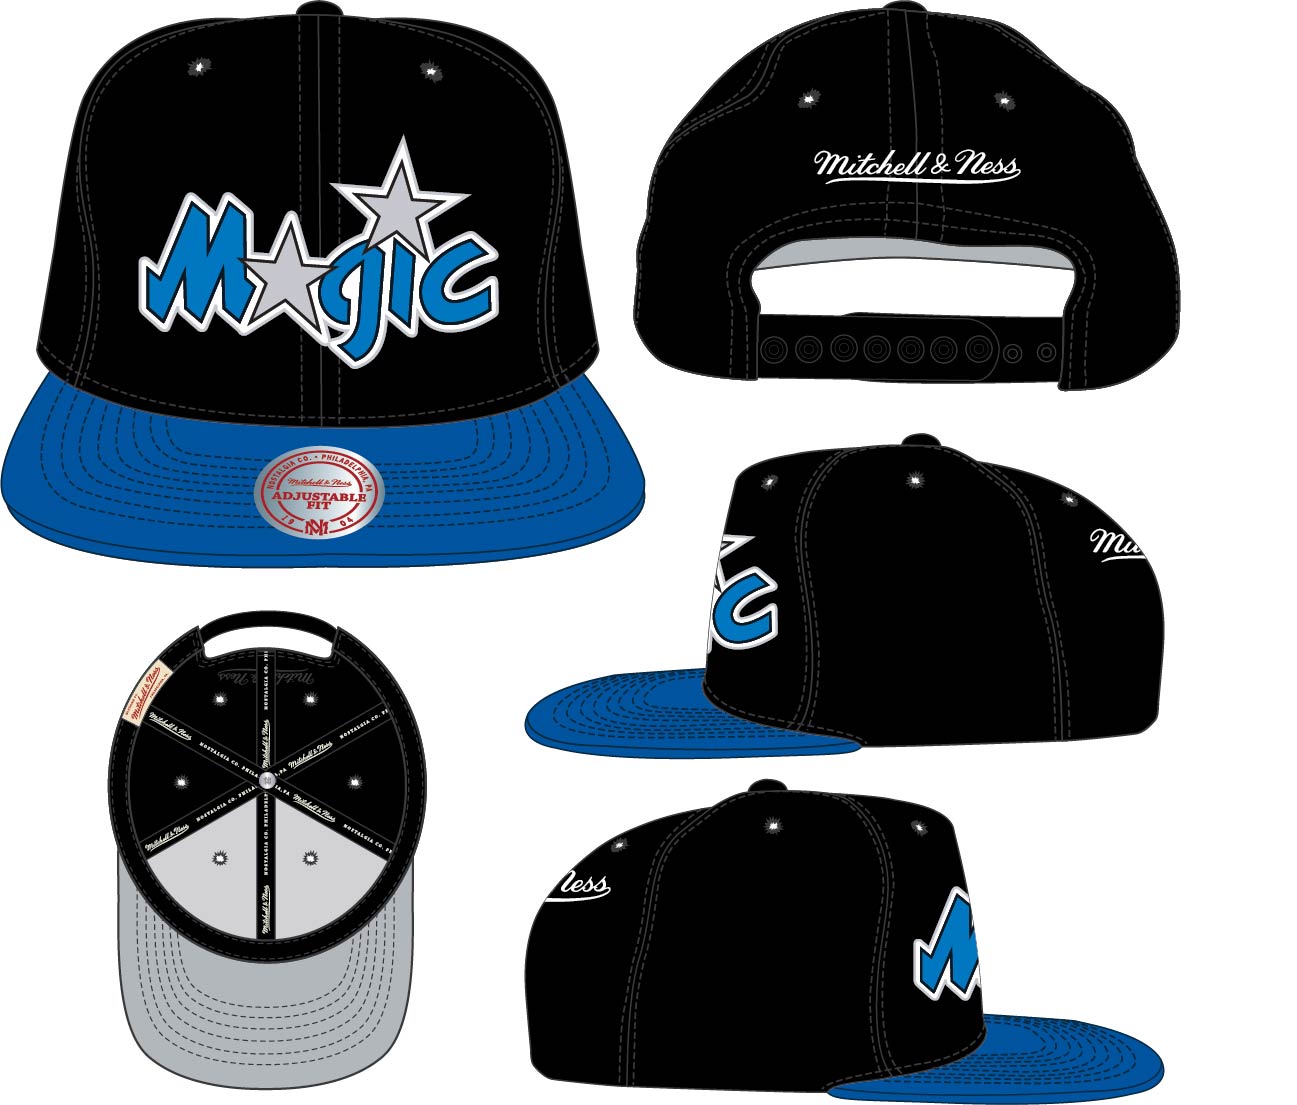 Men's Orlando Magic NBA Core Basic Black/Blue Mitchell & Ness Snapback Hat